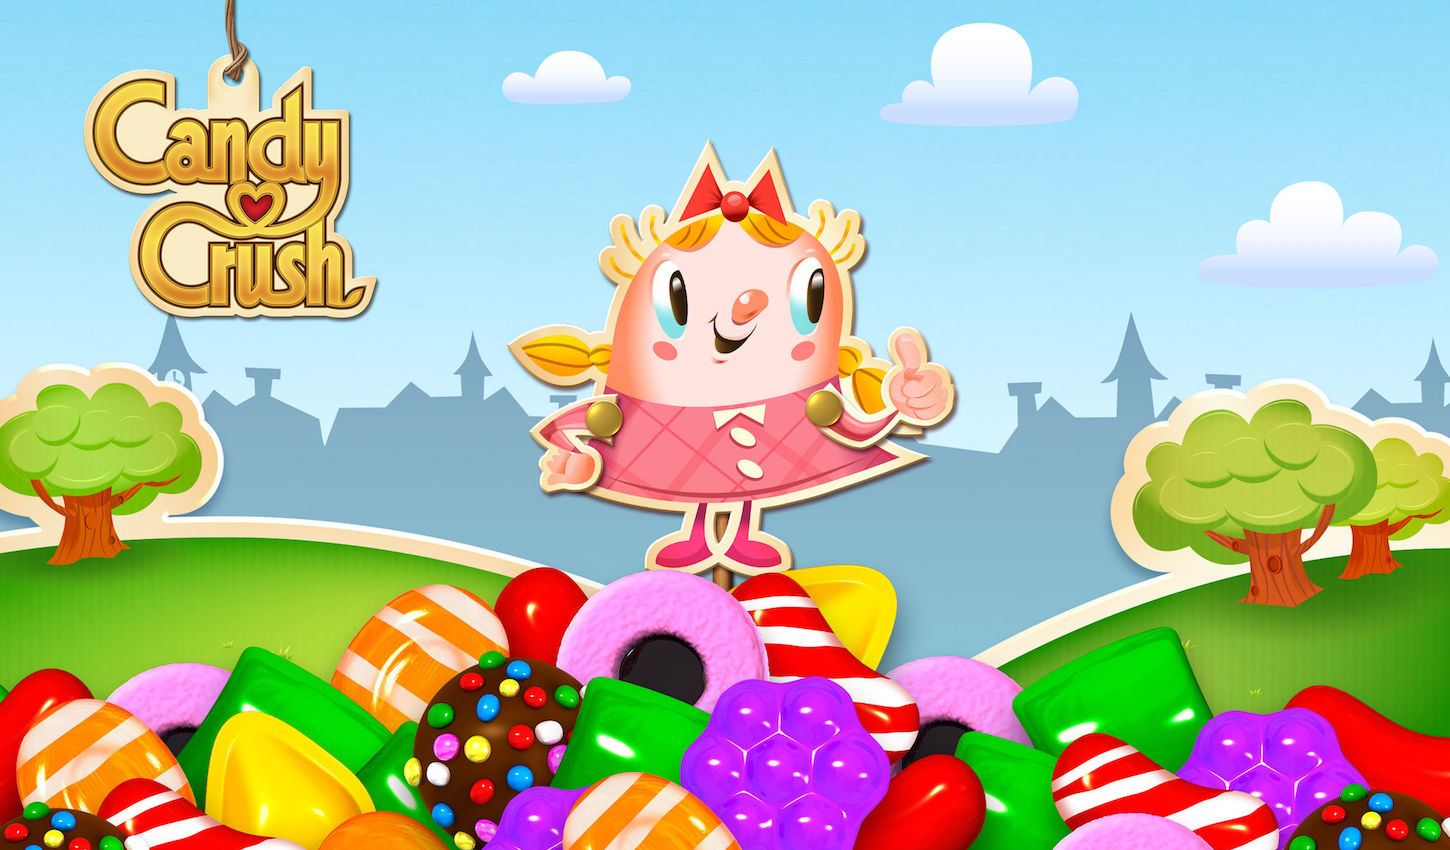 Candy Crush Saga reaches 500M installs - Mobile World Live